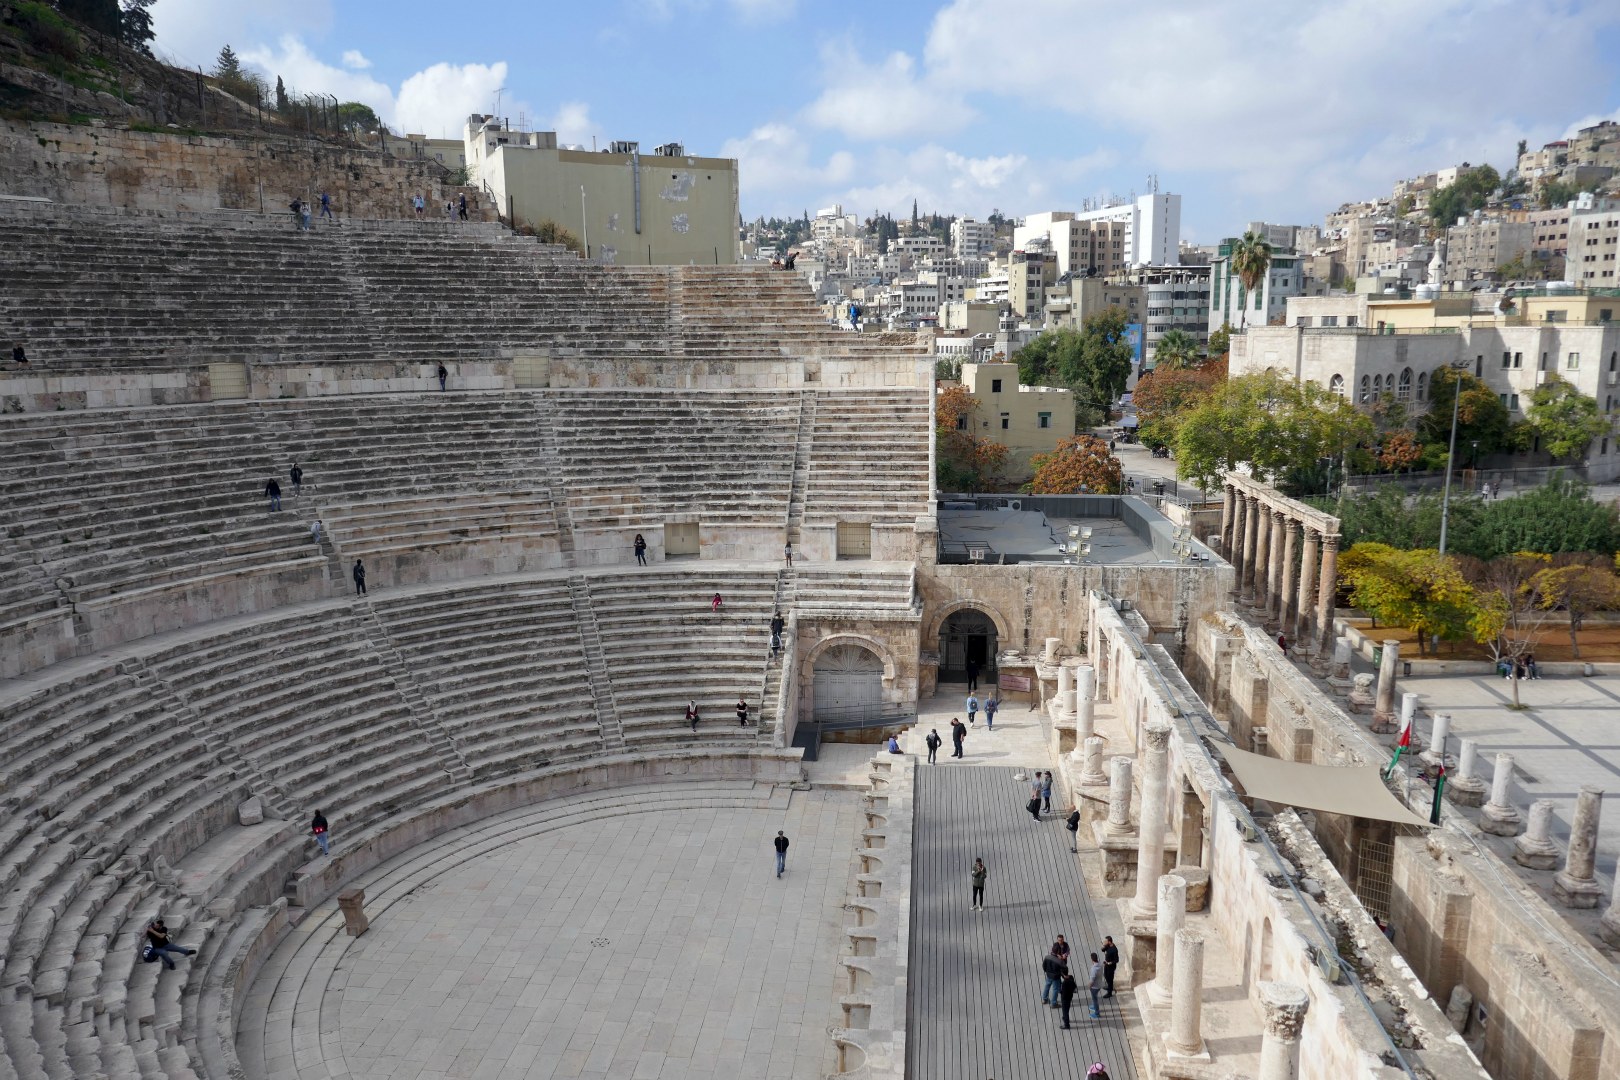 Amphitheatre, Amman